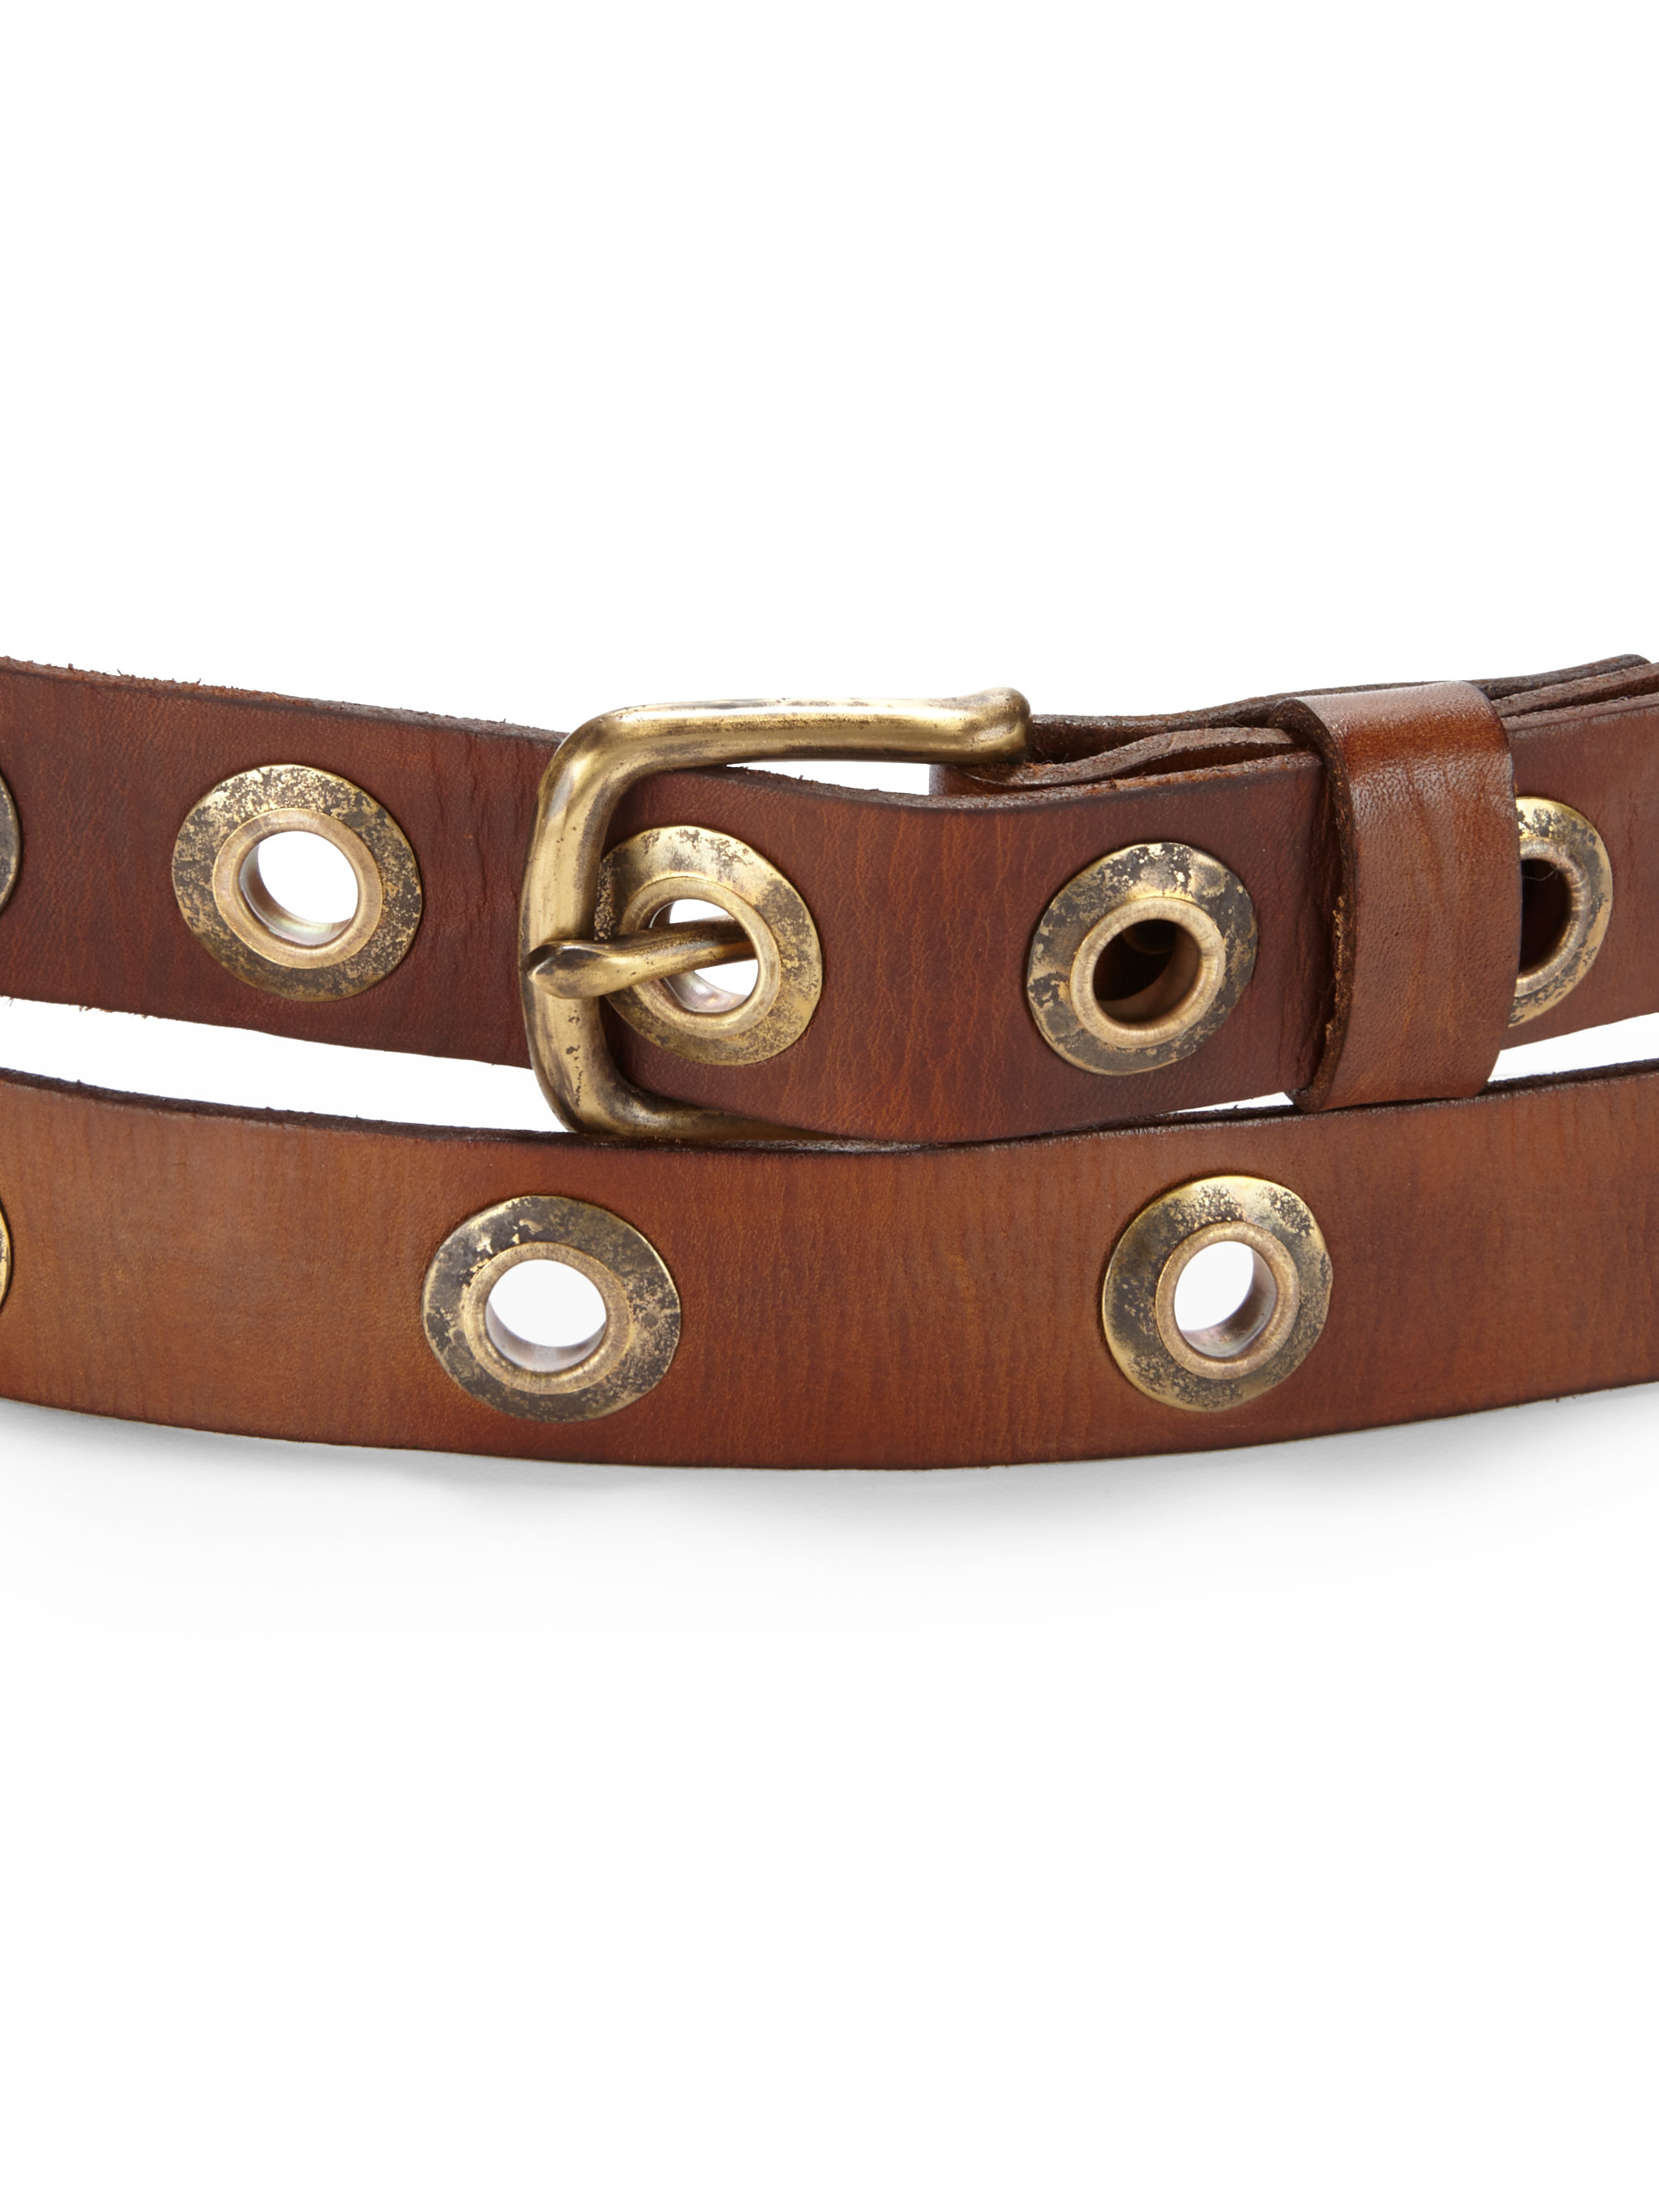 Lyst - Donna Karan Leather Double Wrap Grommet Belt in Brown